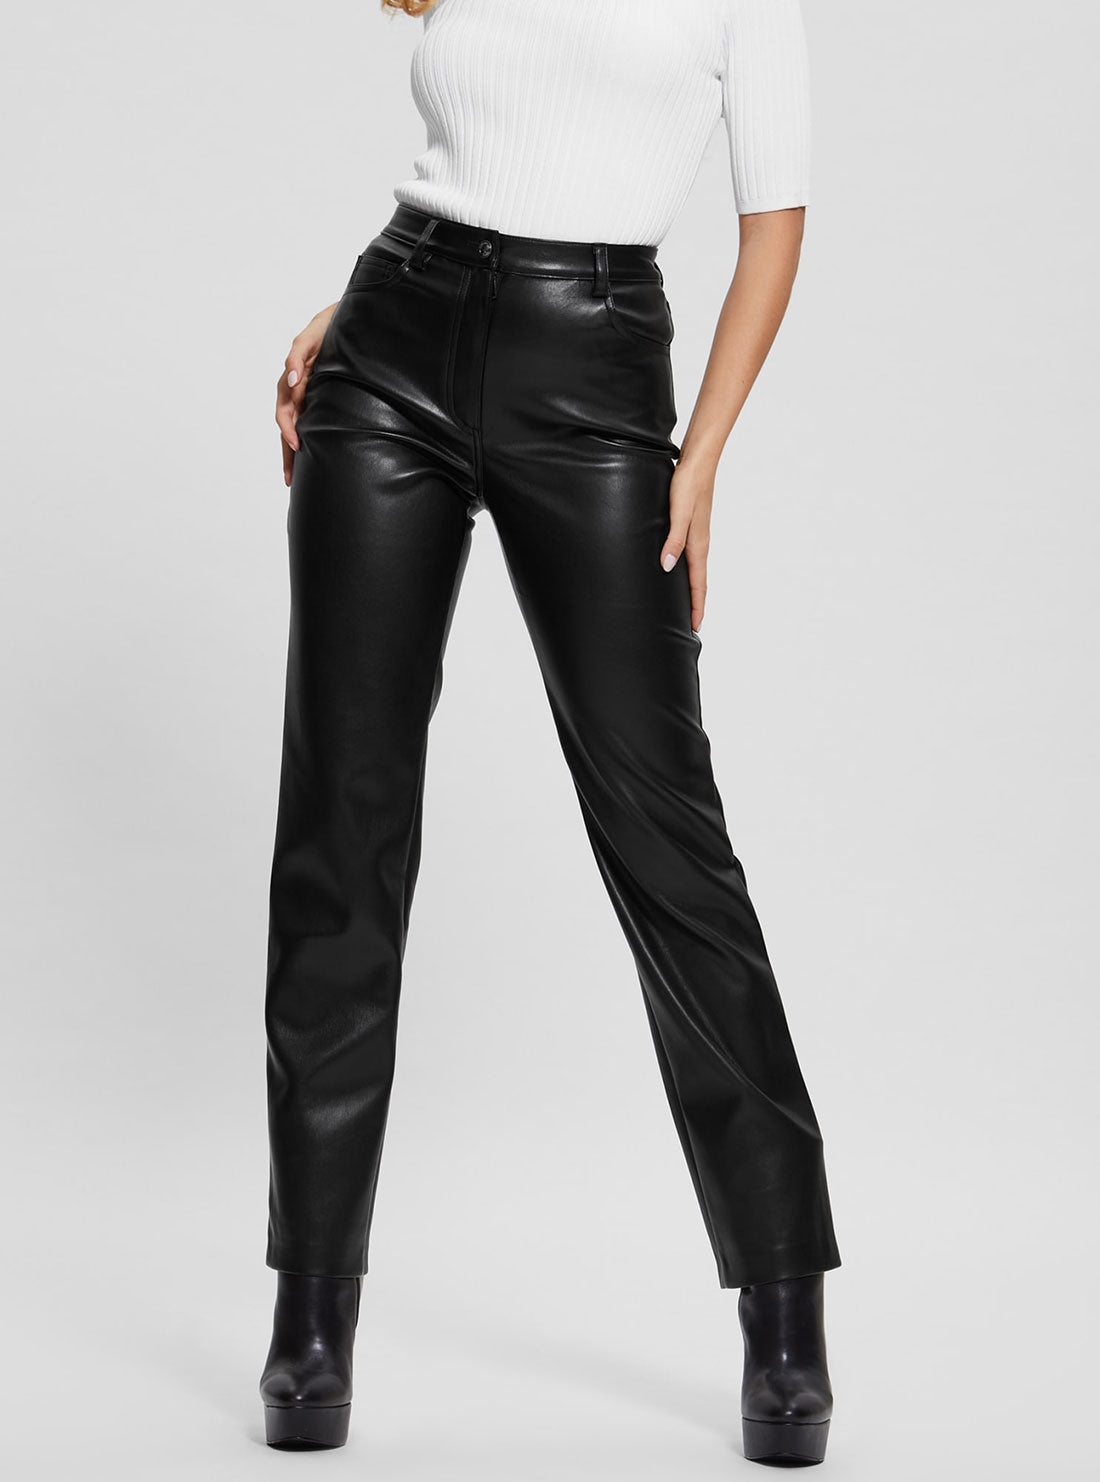 GUESS Women's Black Kelly Faux Leather Pants W3RA0MWF8P0 Front View